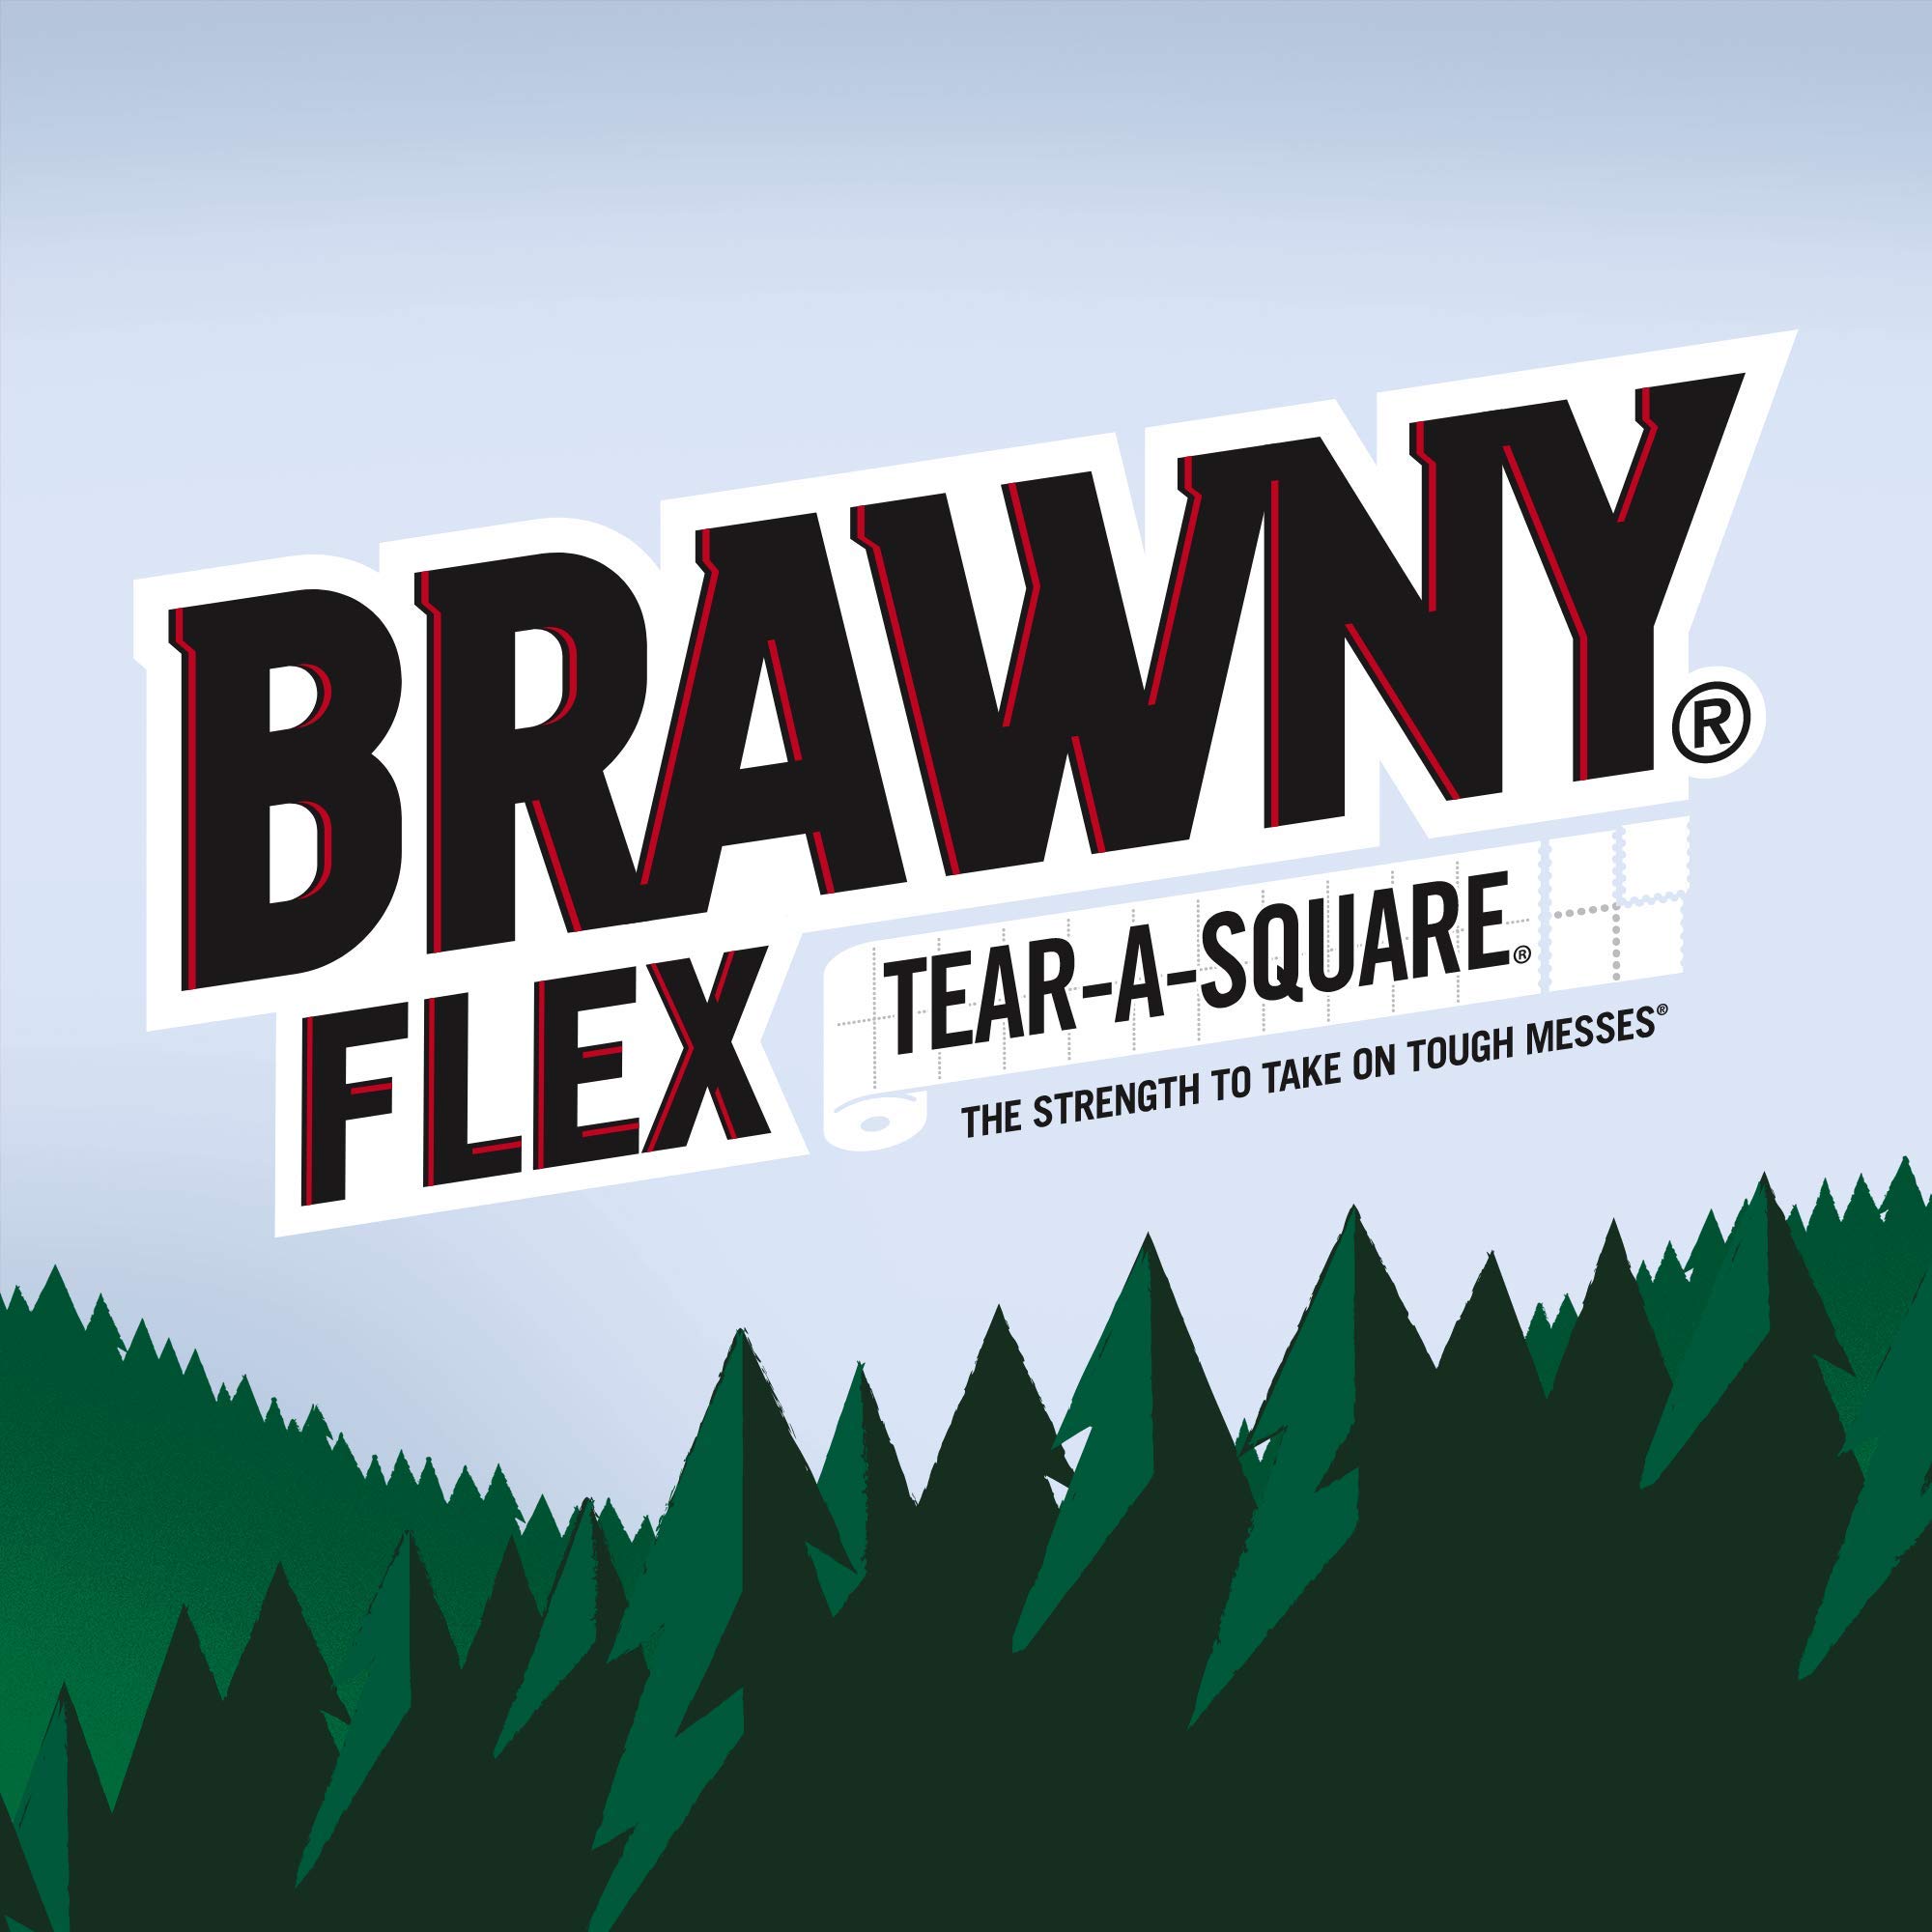 Brawny Flex Paper Towels, 8 Triple Rolls = 24 Regular Rolls, Tear-A-Square, 3 Sheet Size Options, Quarter Size Sheets